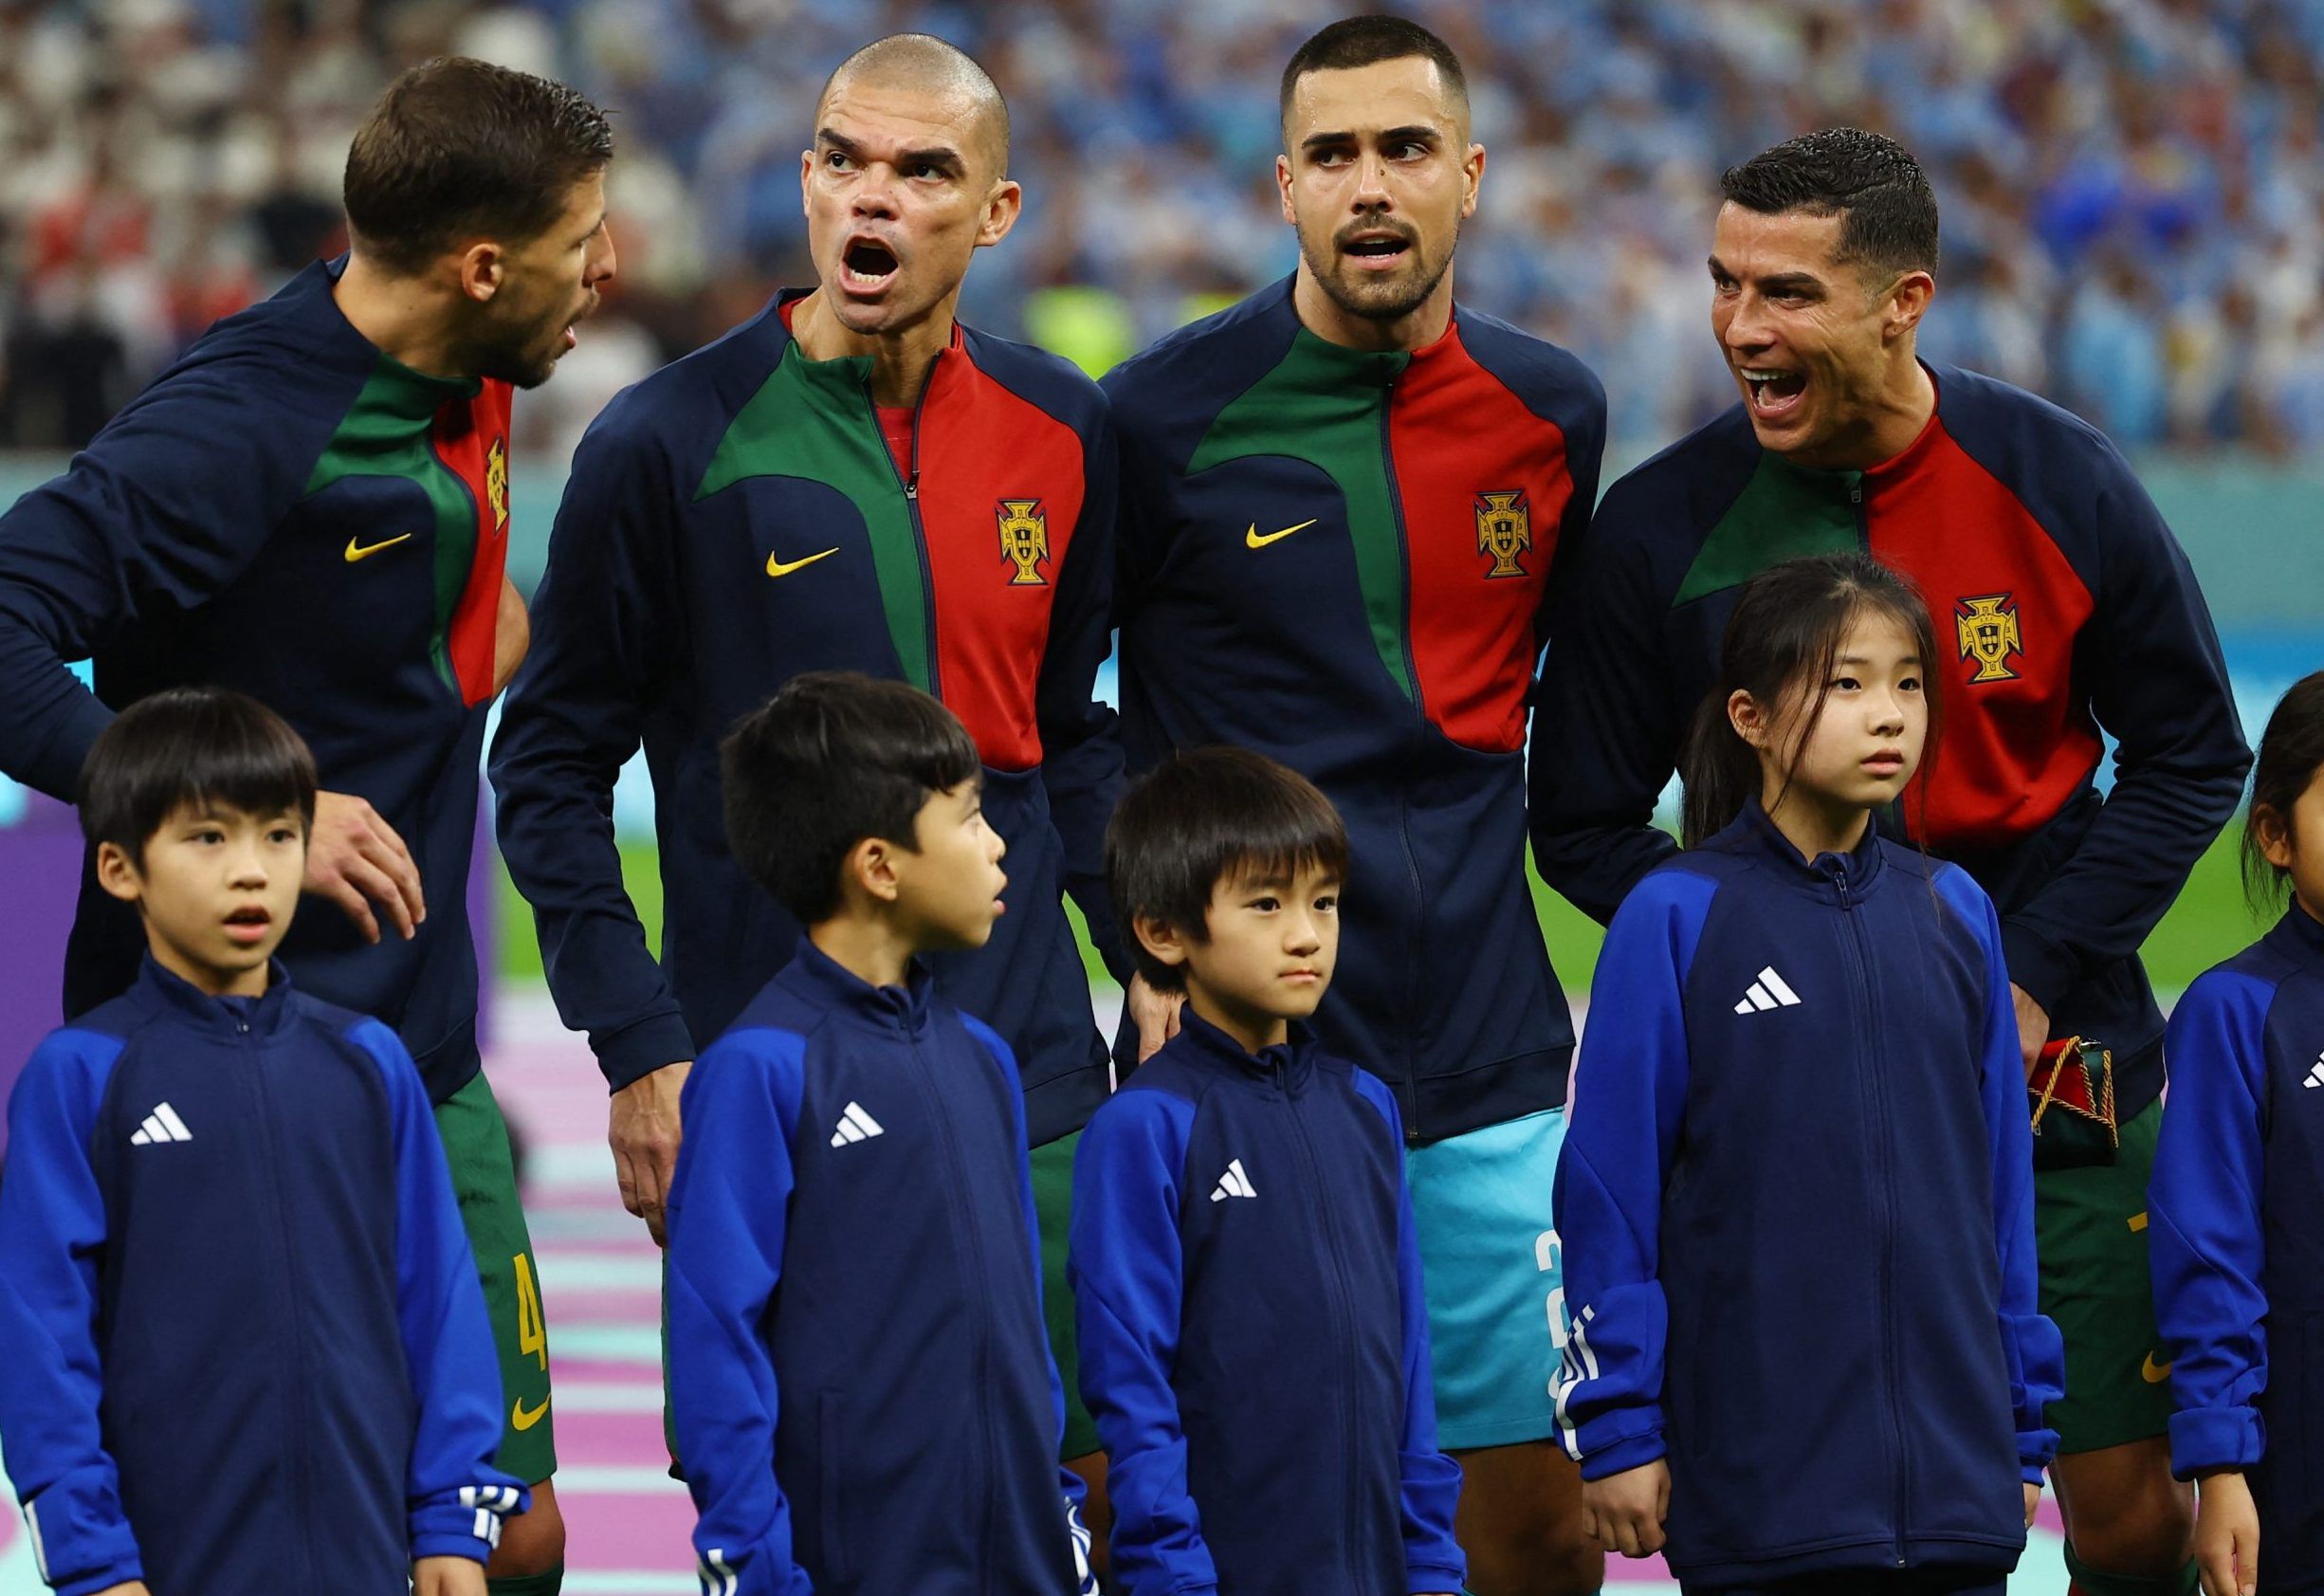  Portugal's Ruben Dias, Pepe, Diogo Costa and Cristiano Ronaldo line up before the match